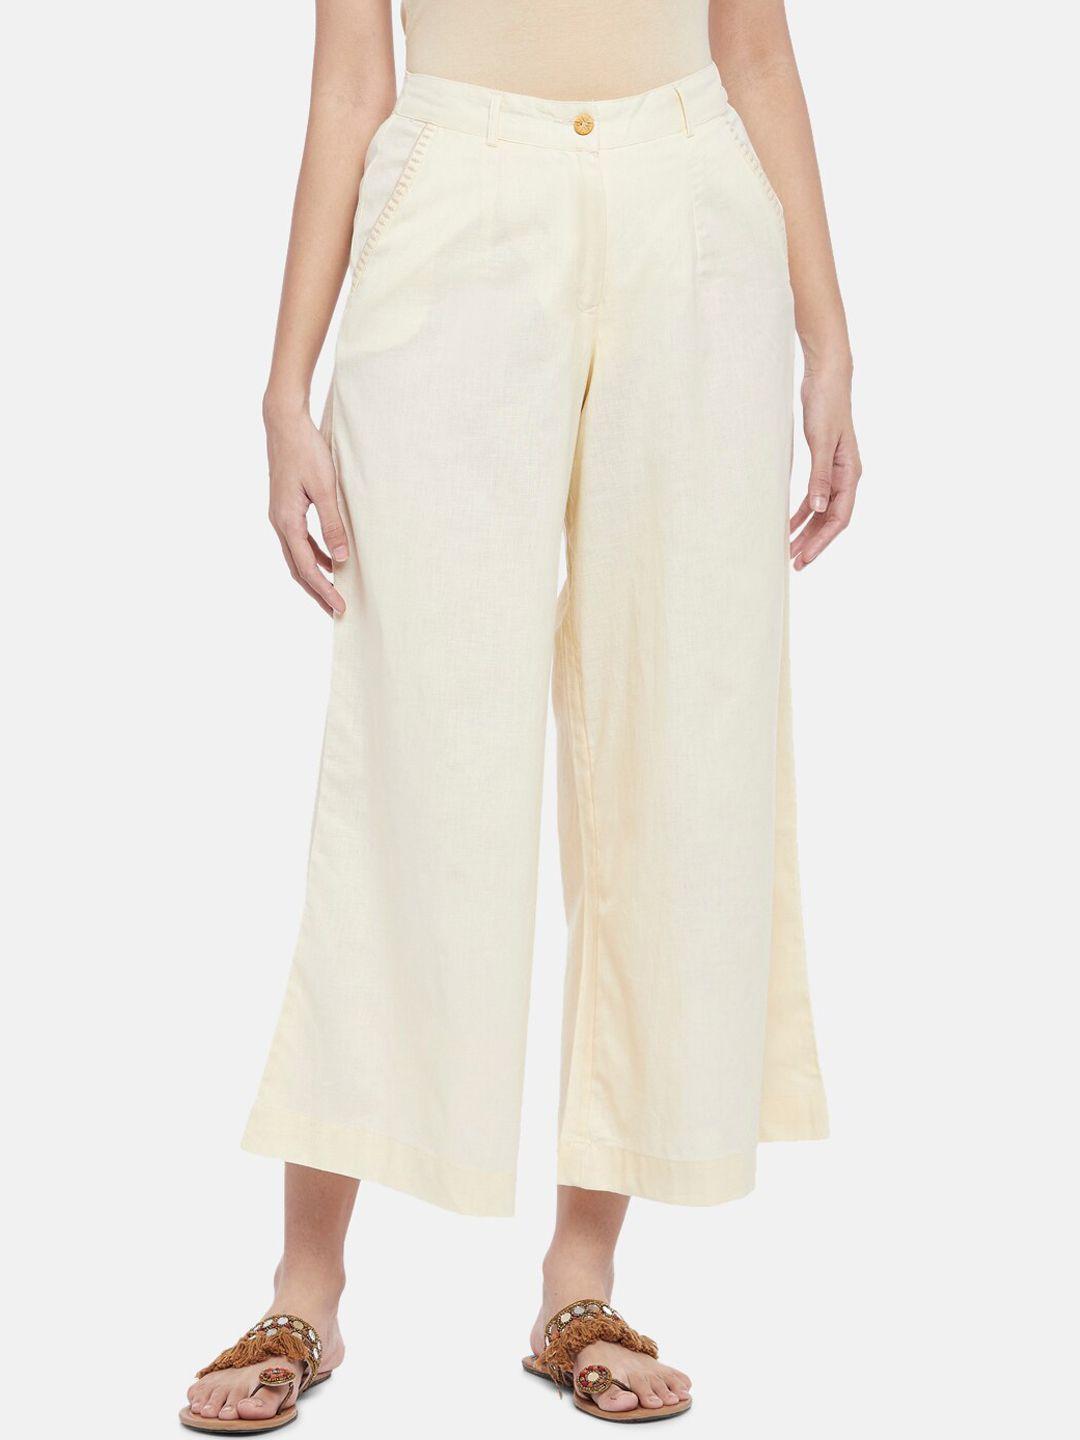 akkriti-by-pantaloons-women-beige-pure-cotton-culottes-trousers